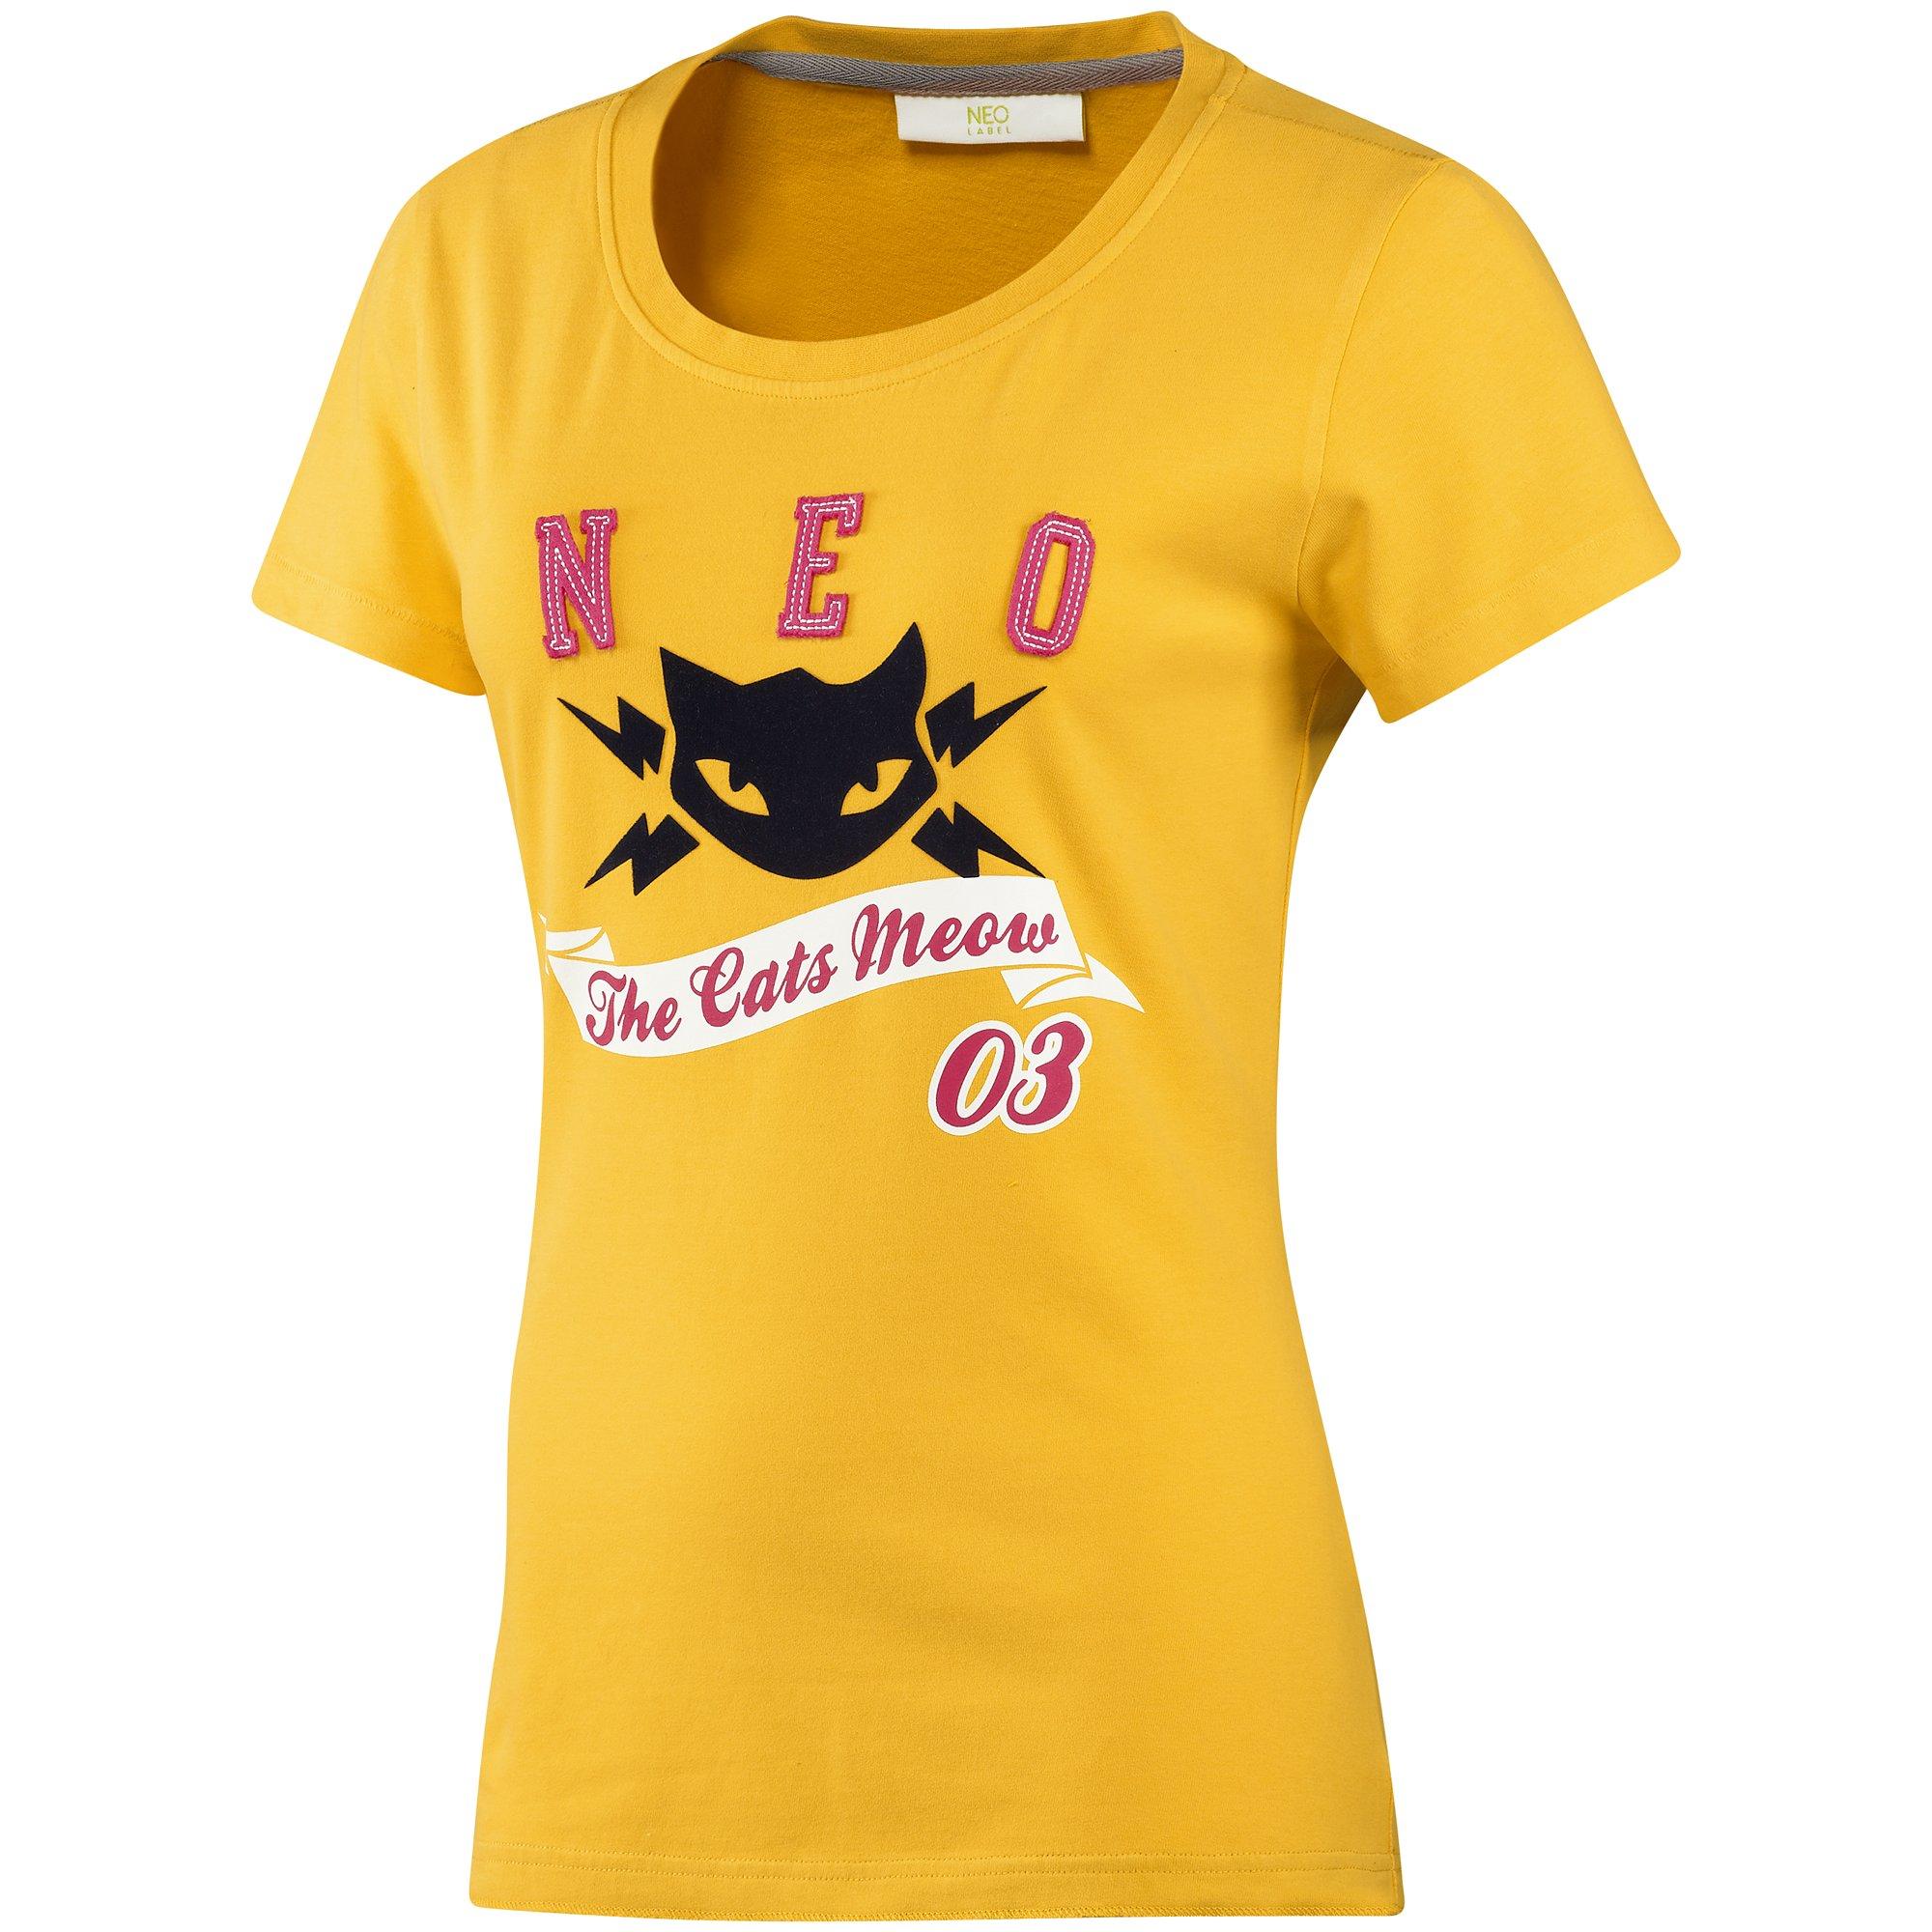 Foto adidas Camiseta Cat Mujer foto 423987